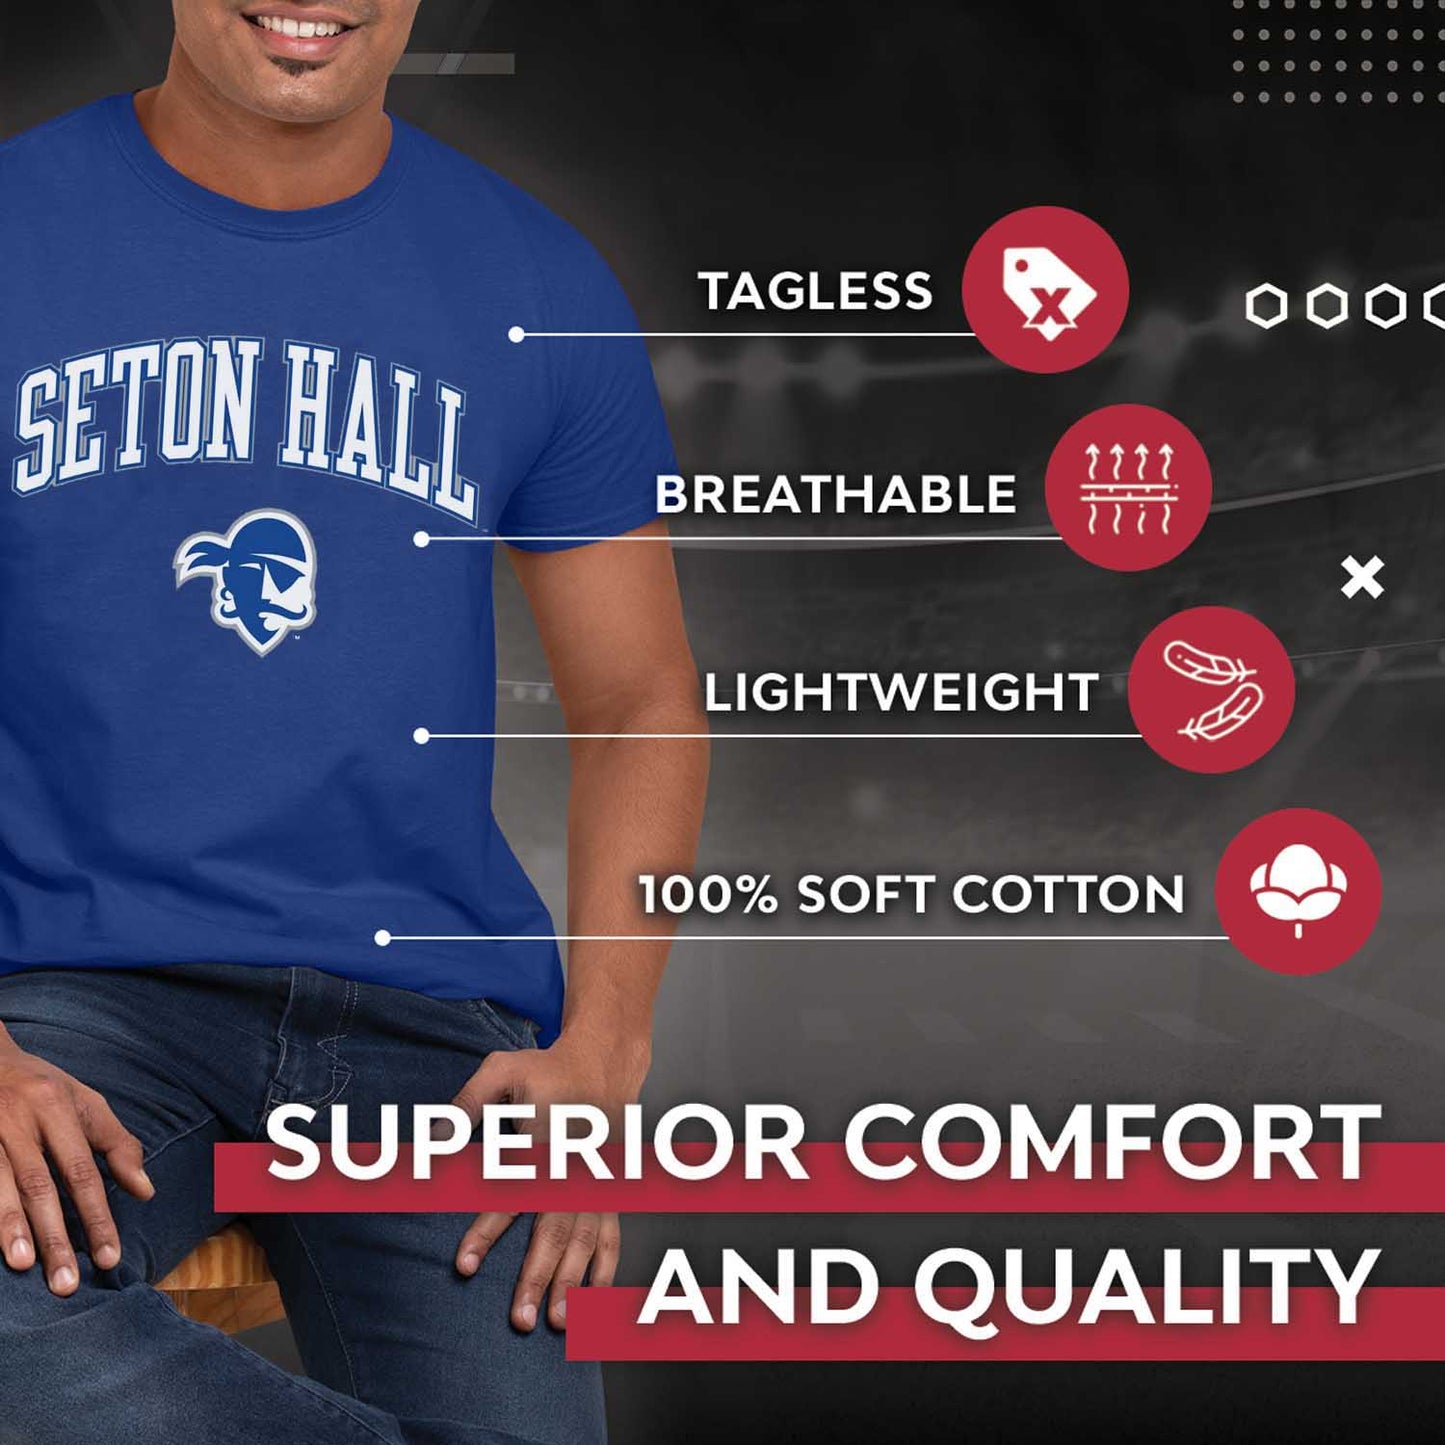 Seton Hall Pirates NCAA Adult Gameday Cotton T-Shirt - Royal